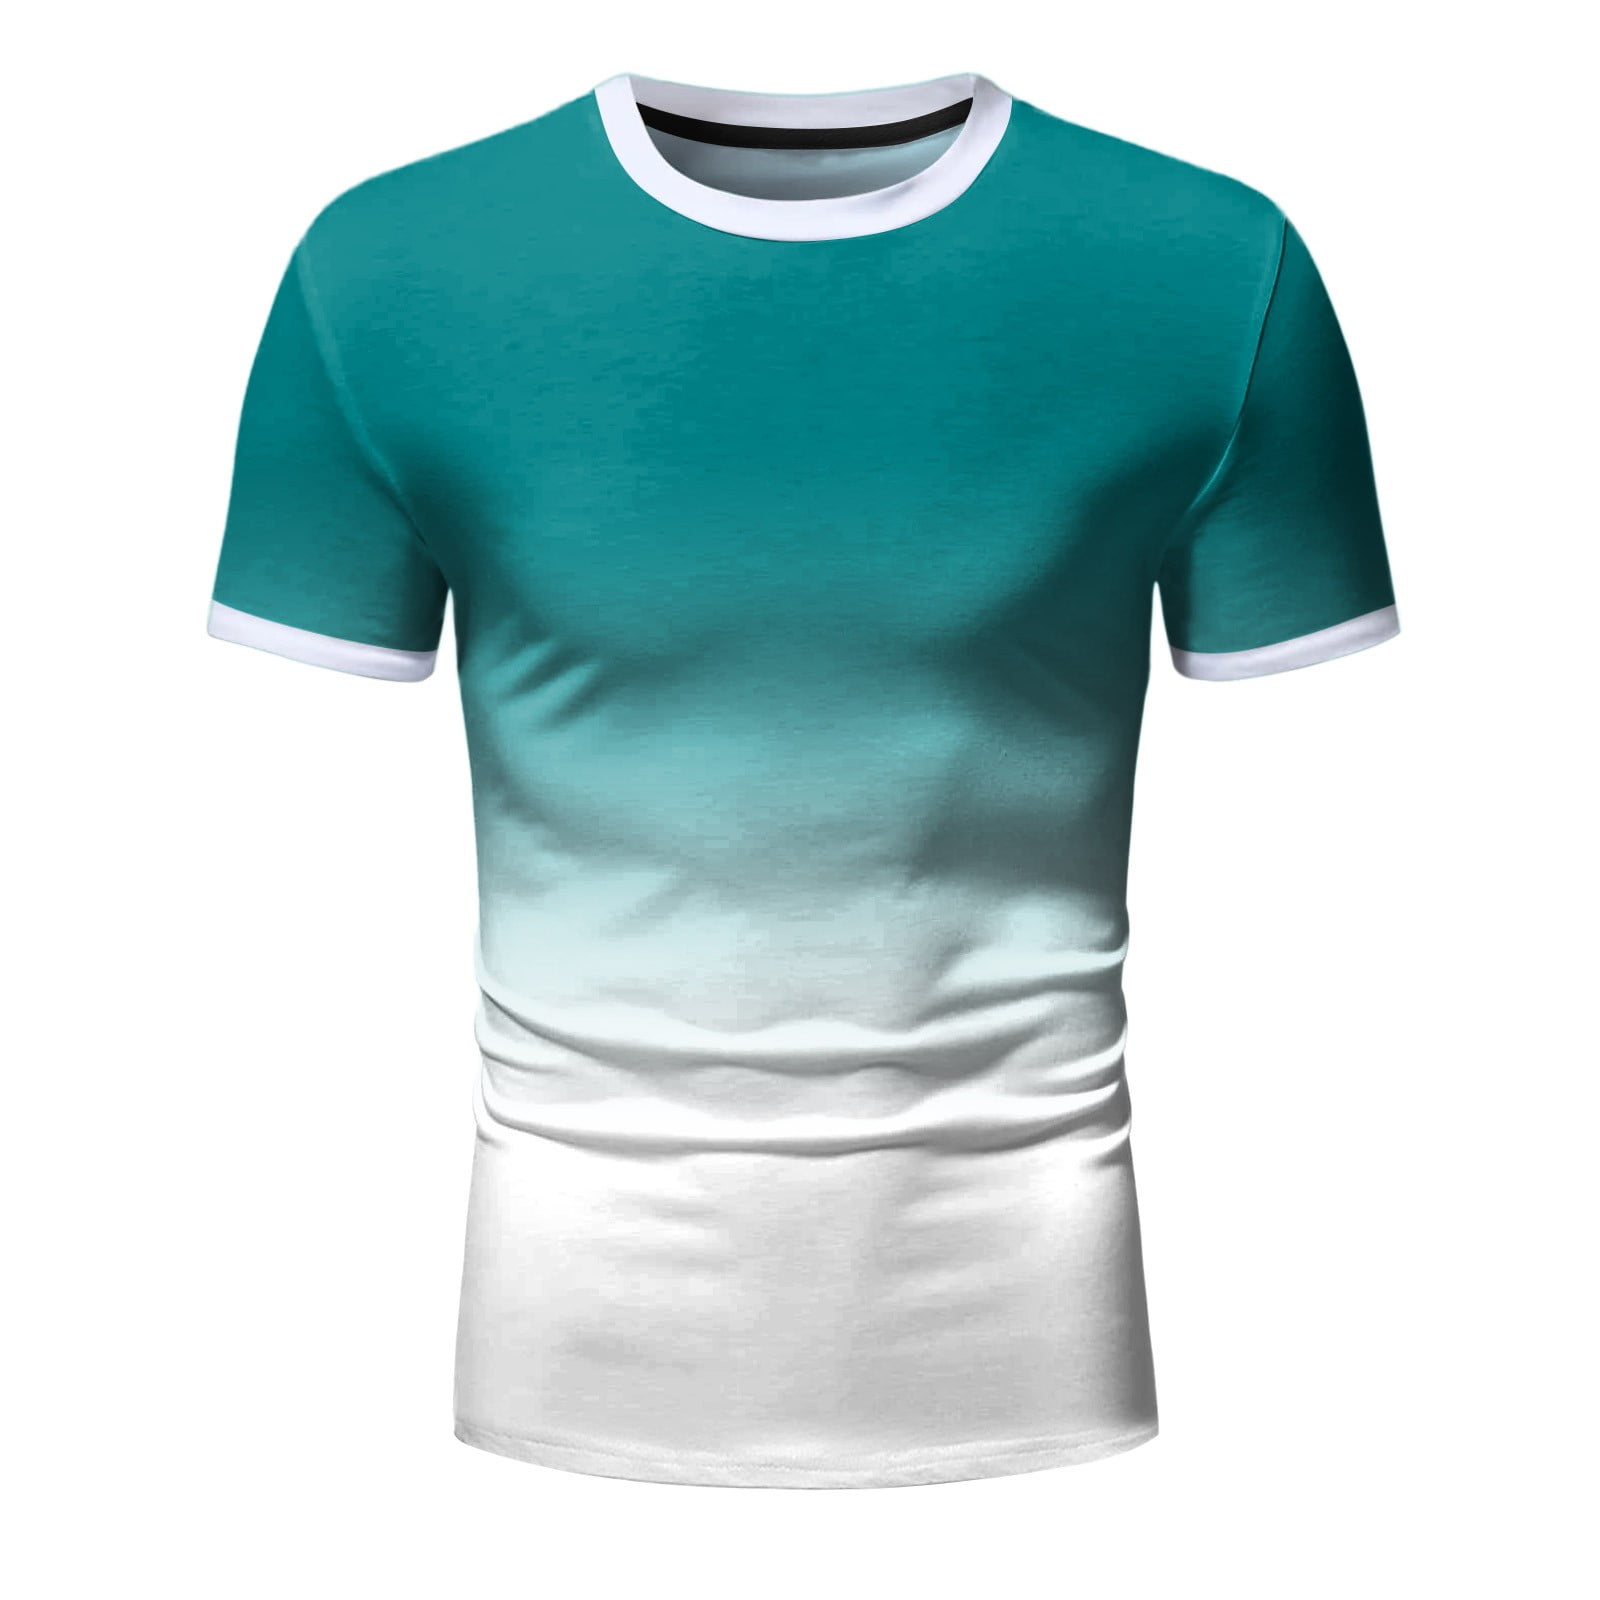 kpoplk T Shirts For Men,Men's Shirts Short Sleeve 3D Printed T-Shirt Casual  Quick Dry Slim-Fit Outdoor Hiking Running Fishing Shirts(Mint Green,XXL) 